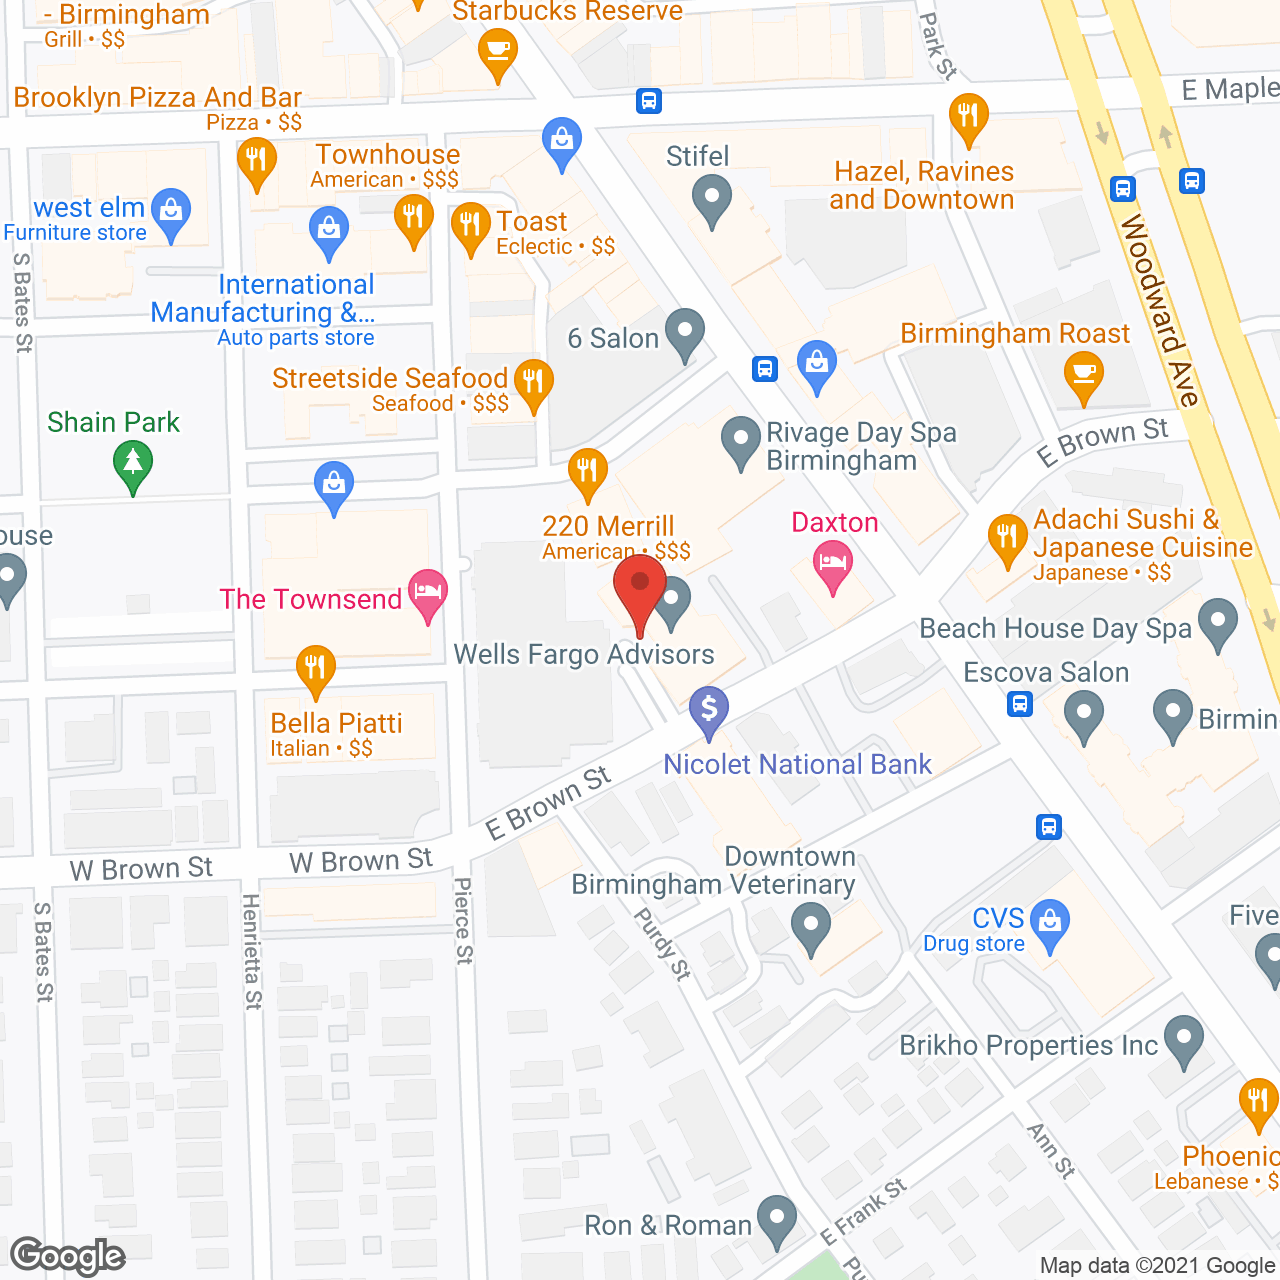 The Sheridan at Birmingham in google map